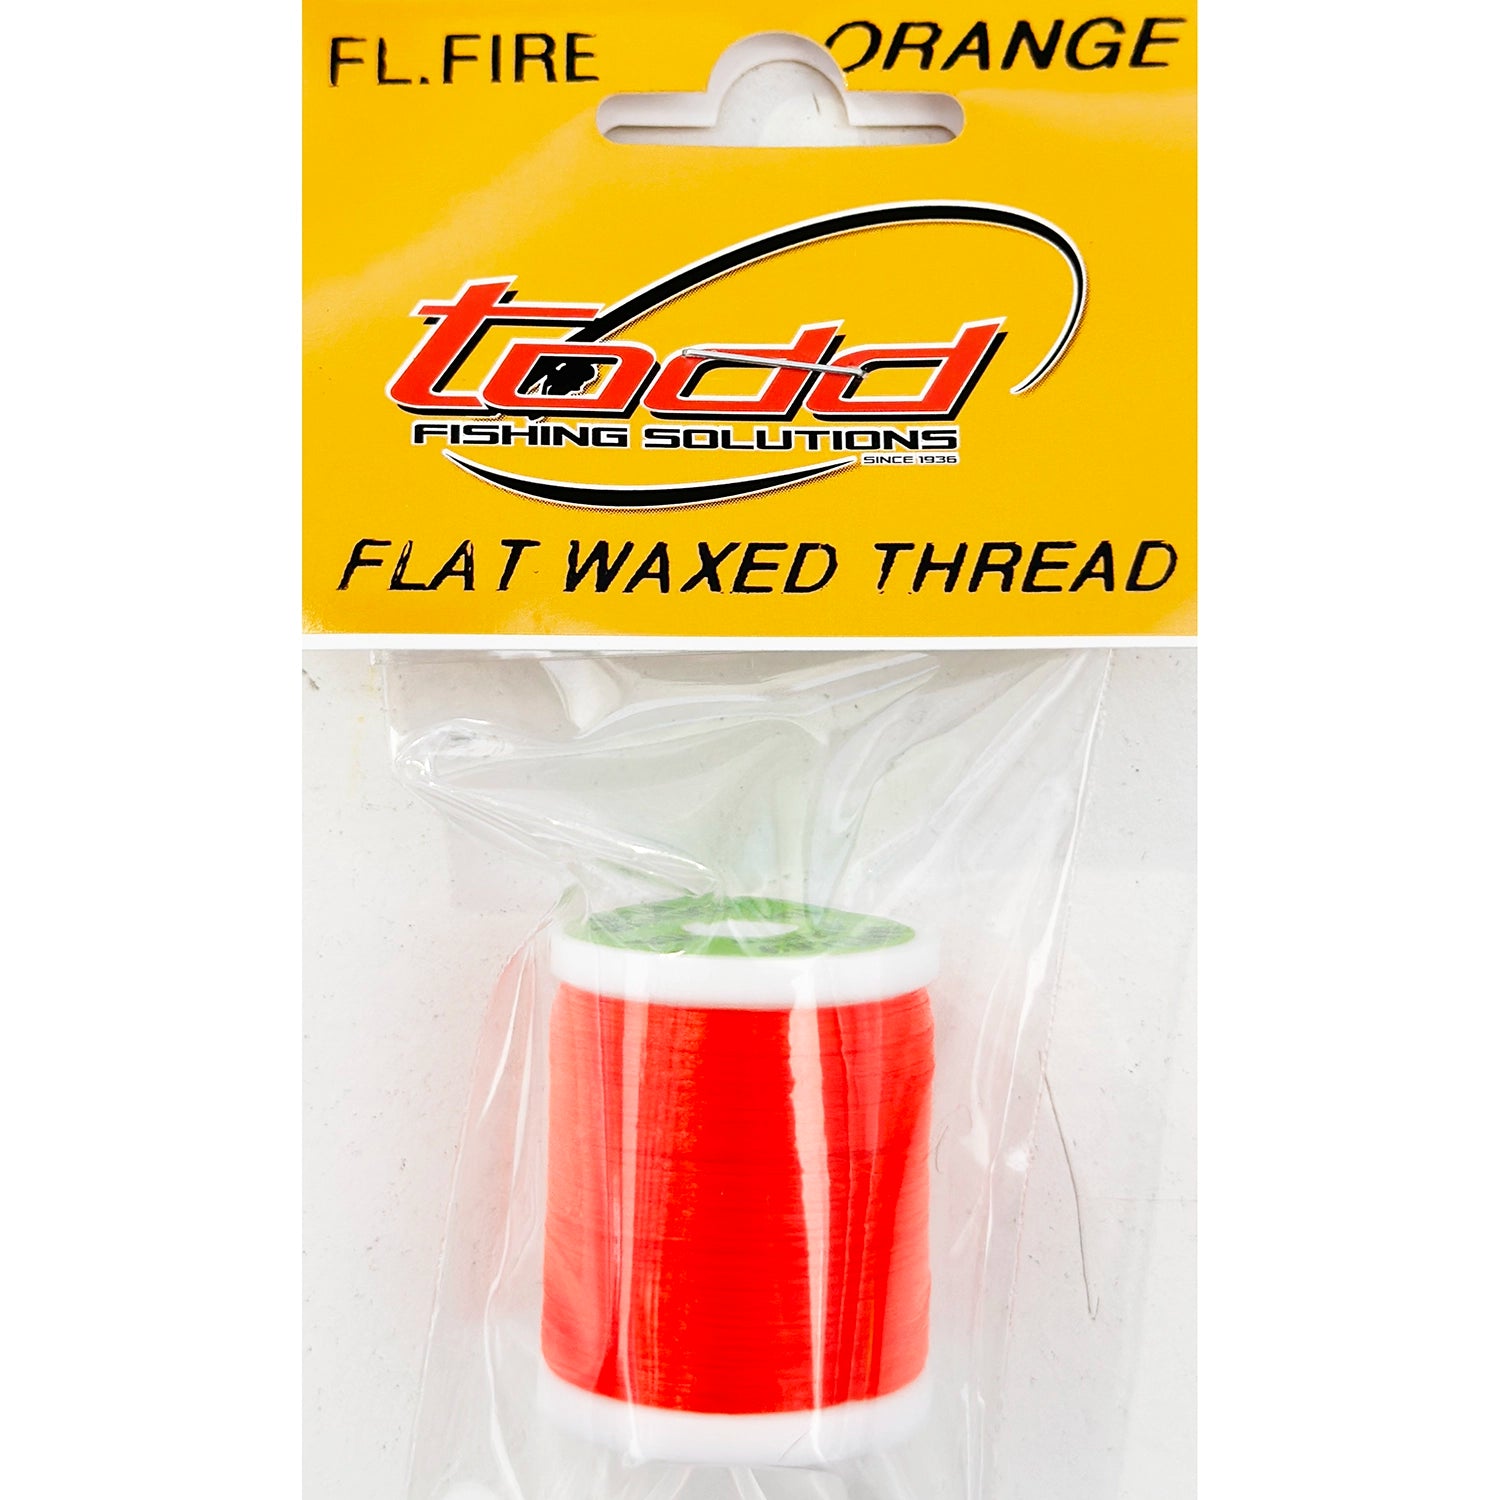 Todd Flat Waxed Thread (210 Denier)-Fly Fishing - Fly Components-Todd-Fl Fire Orange-Fishing Station